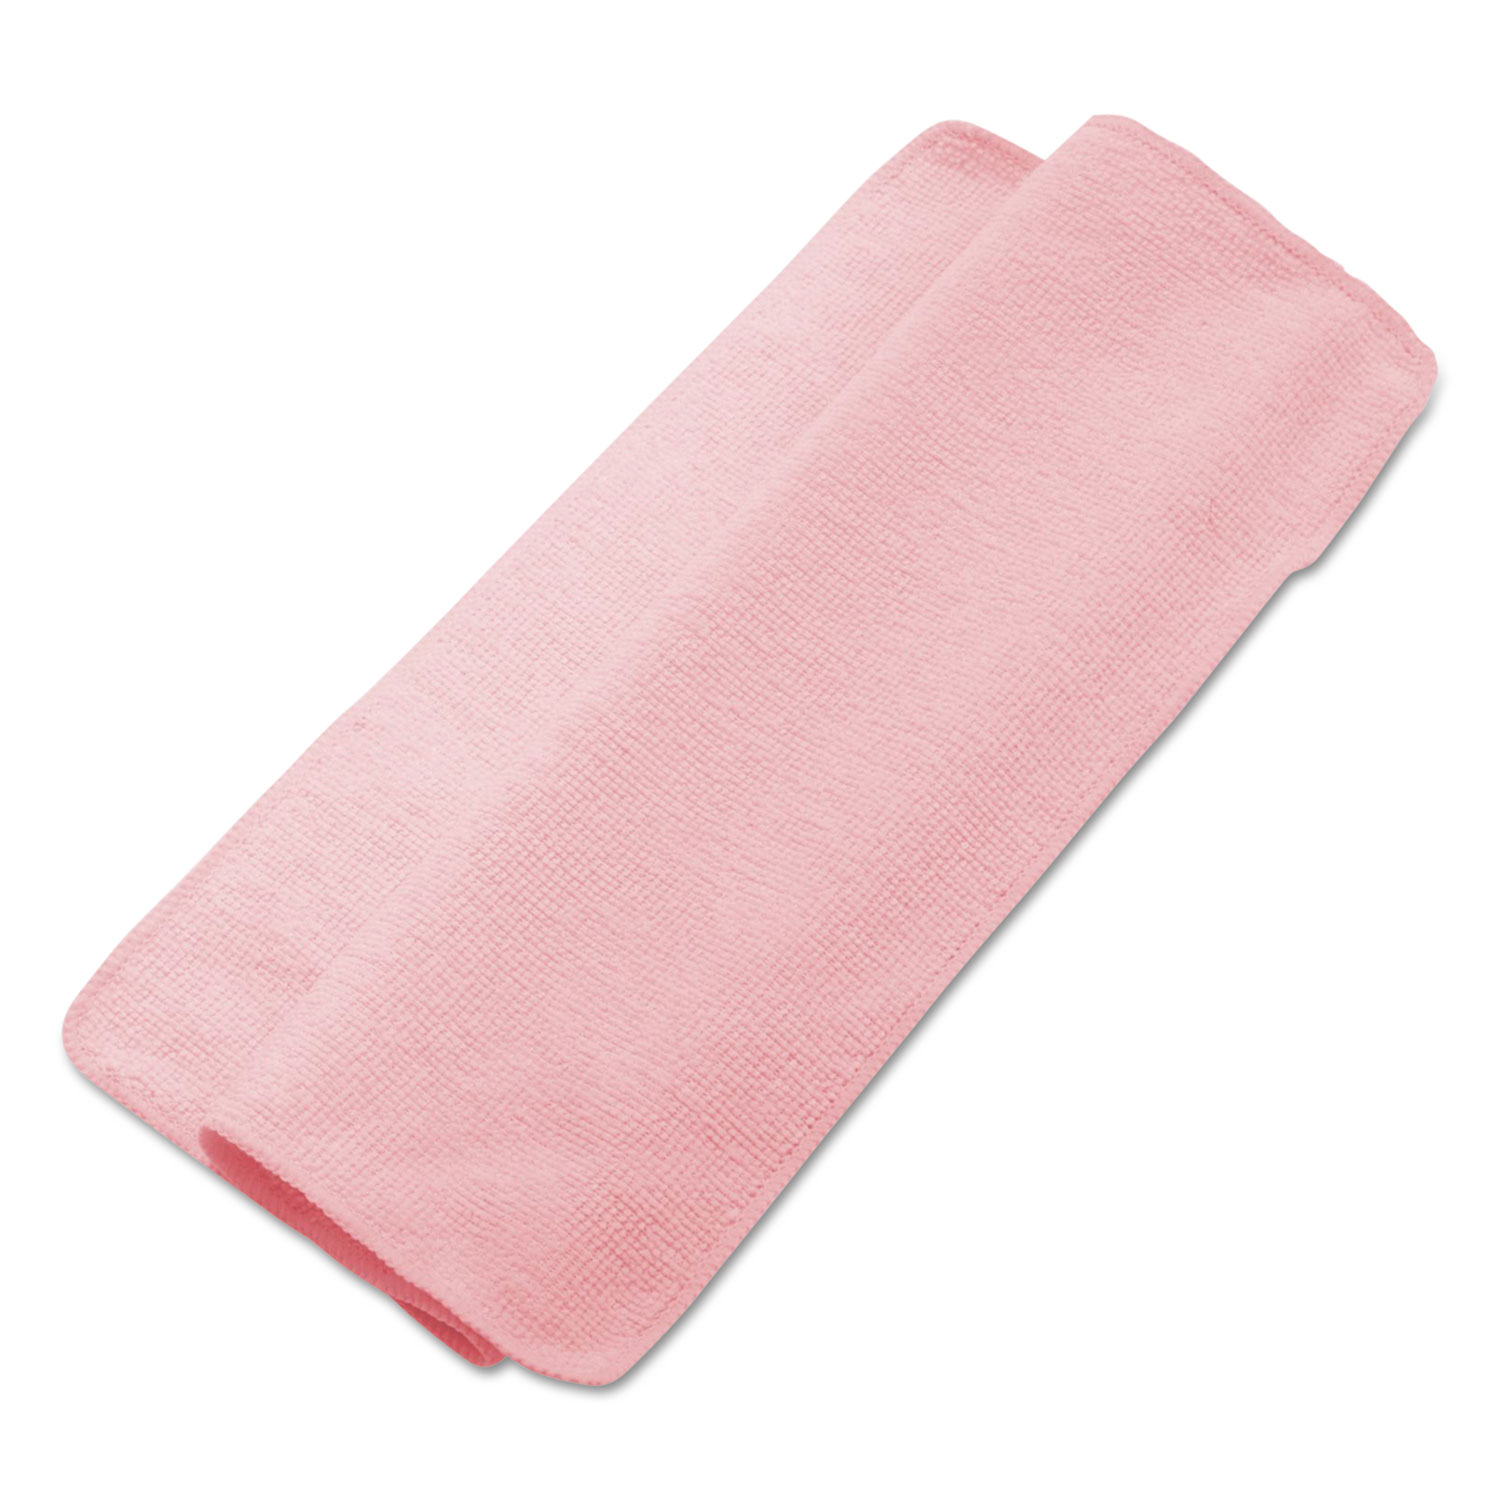  Boardwalk 1889797 Lightweight Microfiber Cleaning Cloths, Pink, 16 x 16, 24/Pack (BWK16REDCLOTH) 